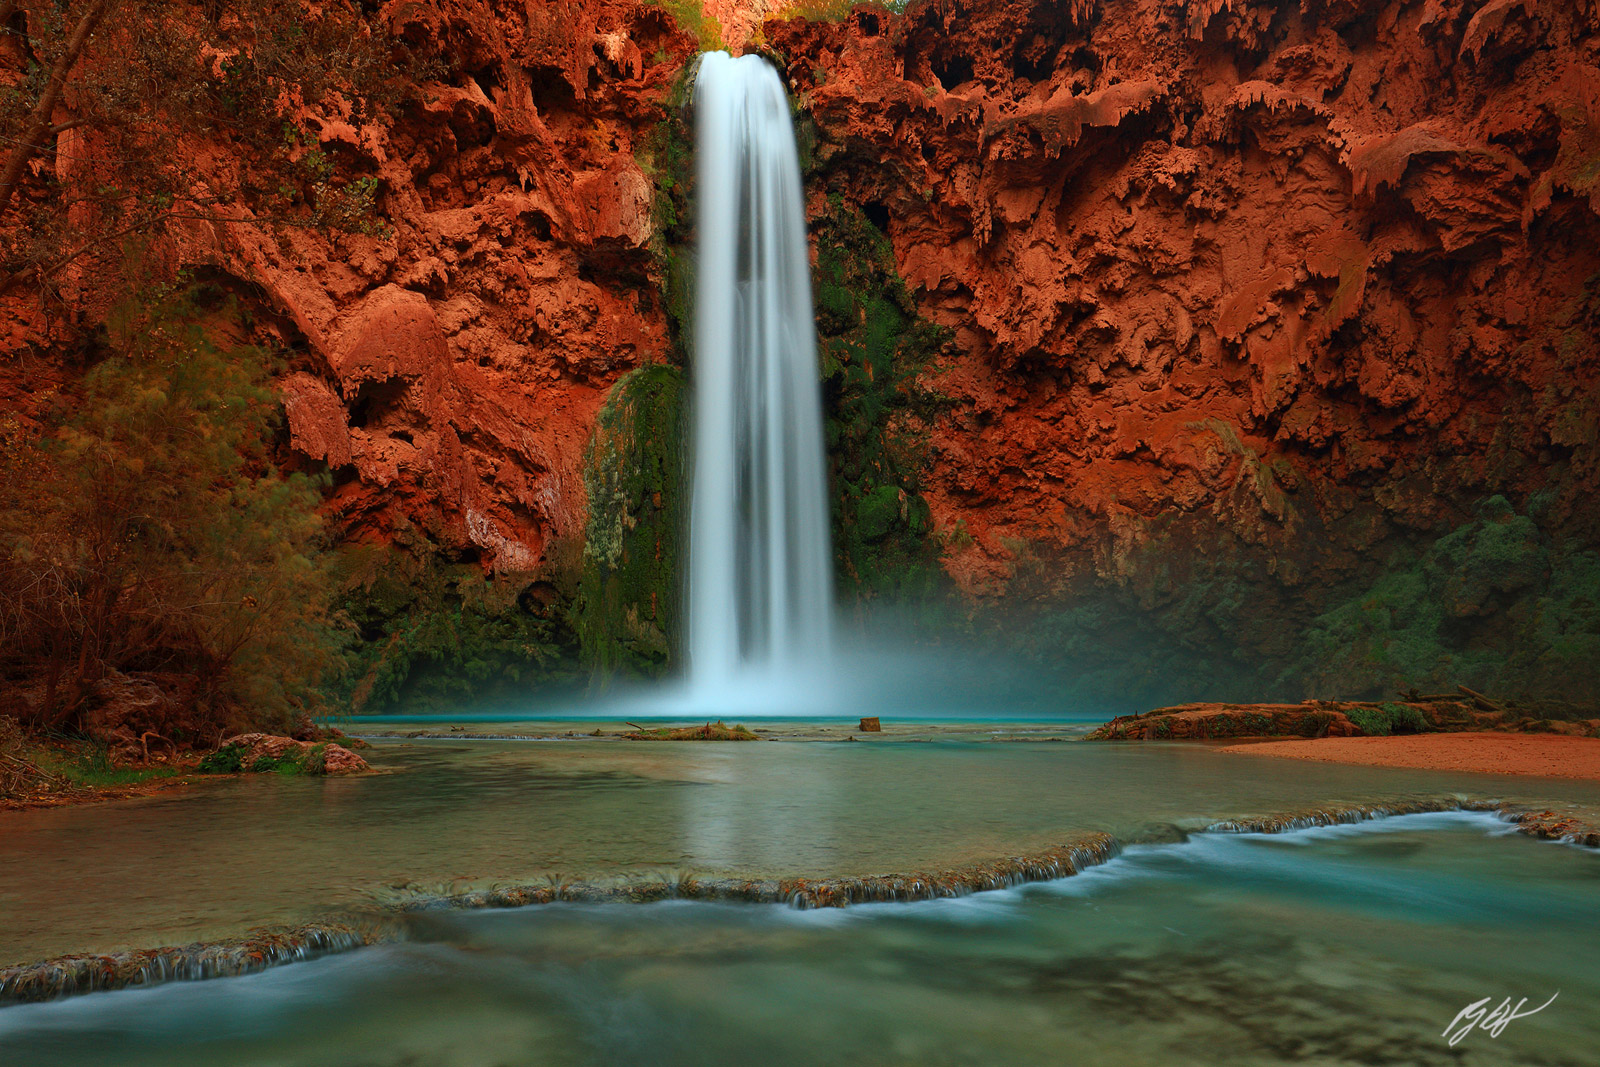 Mooney Falls in Havasu Canyon on the Havasupai Indian Reservation in Arizona